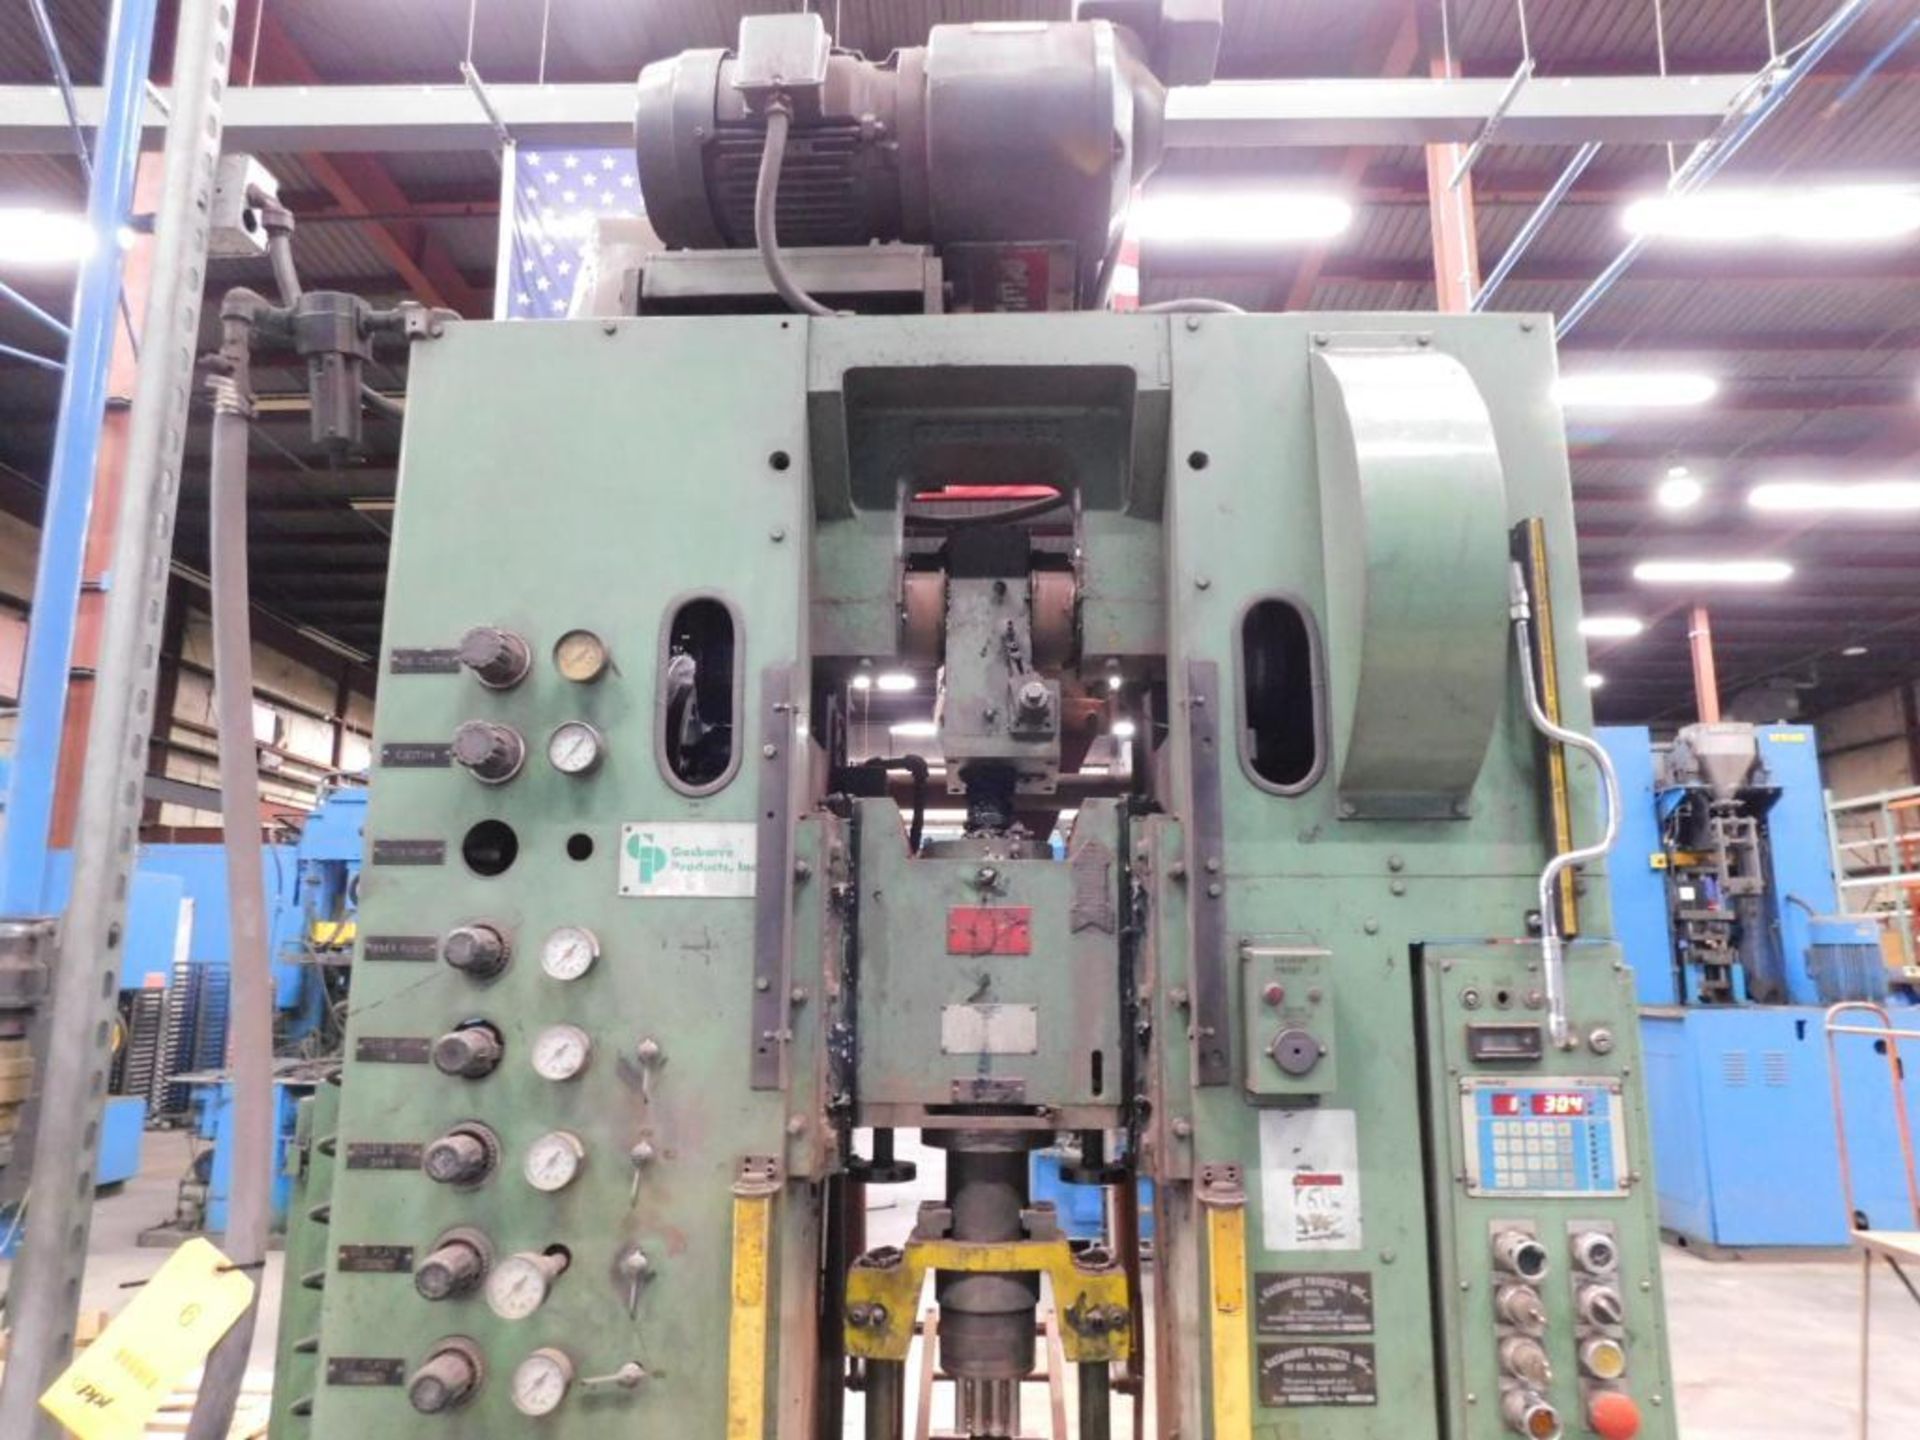 Gasbarre Powder Compacting Press, Mechanical, Model 30 Standard, S/N: 86256, 30 Ton Maximum Pressing - Image 8 of 22